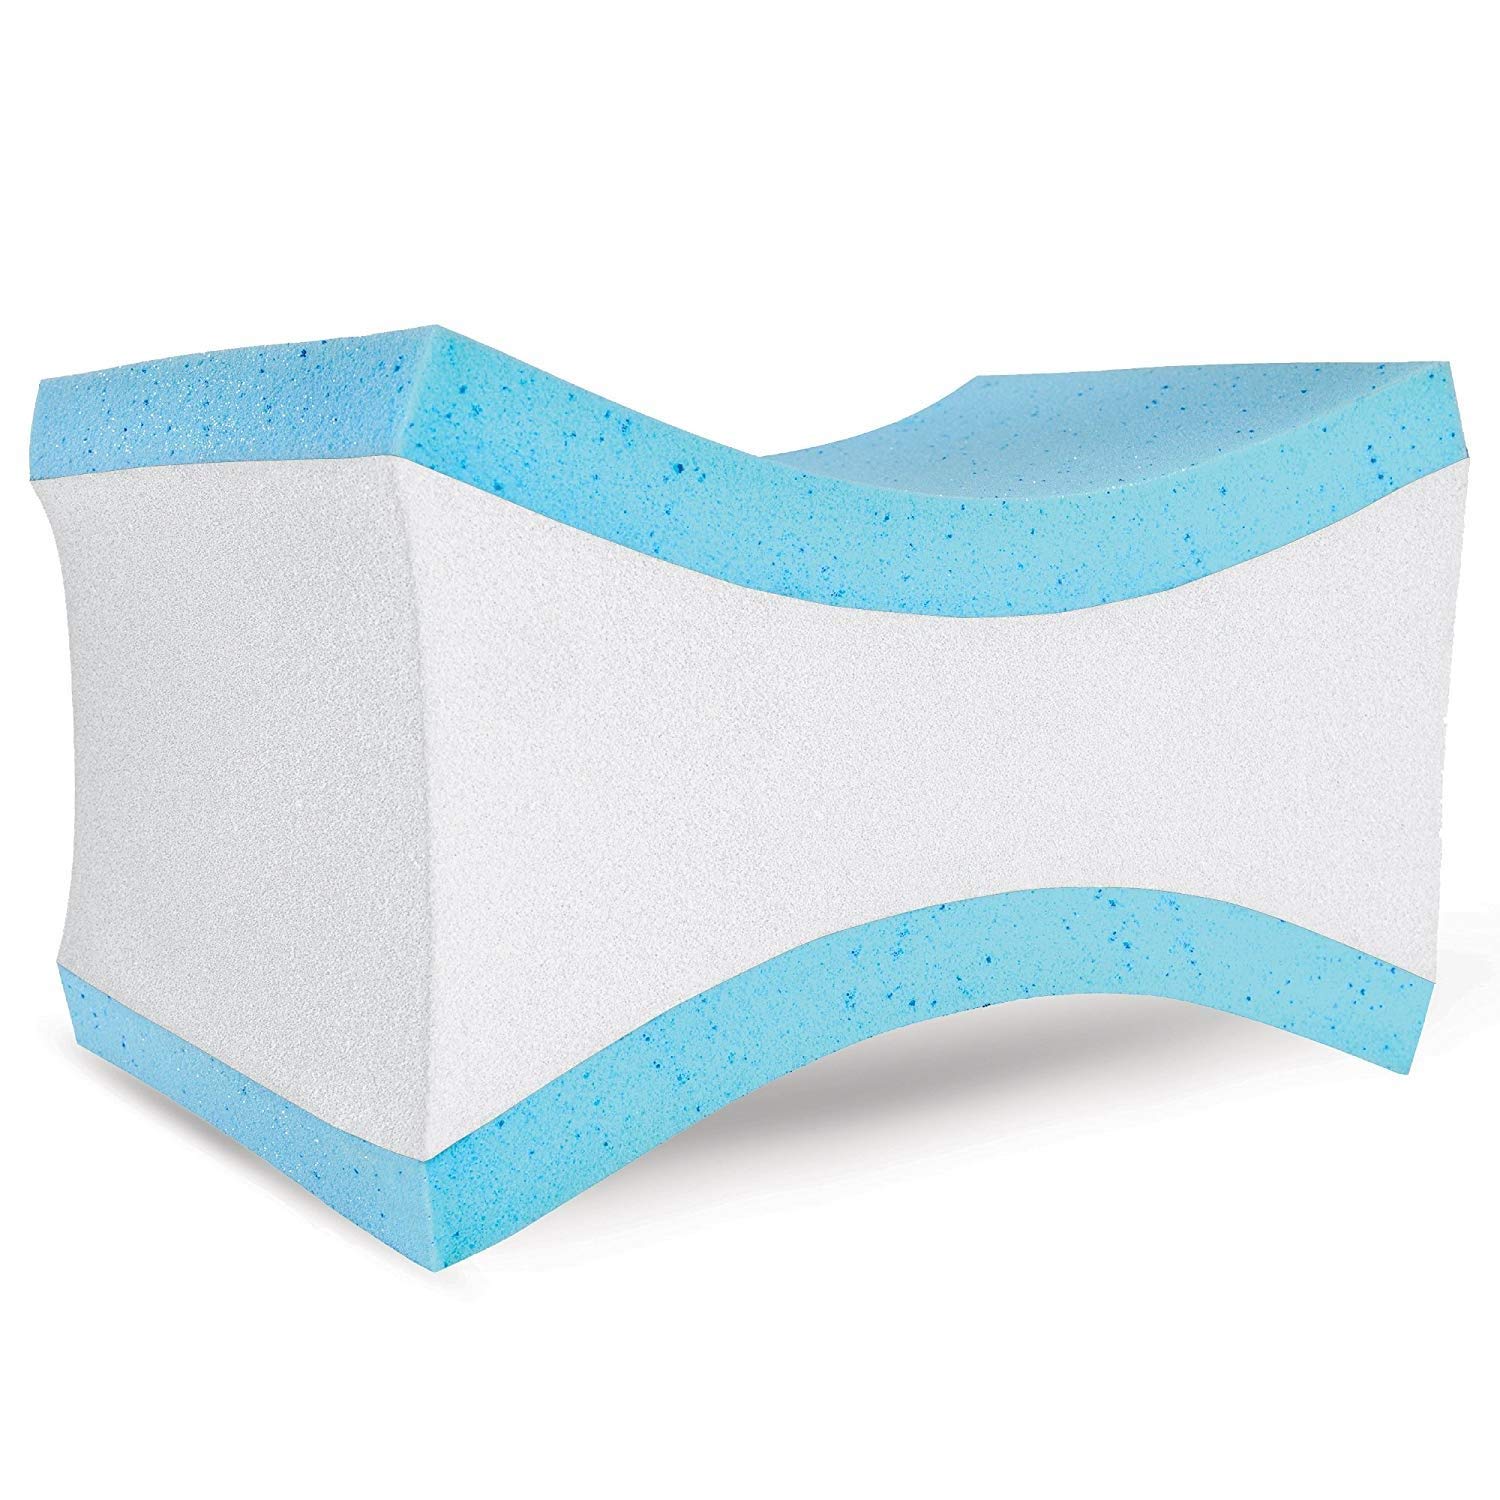 Pharmedoc memory foam knee pillow – Orthopaedic knee wedge pillow for side sleepers – leg support – layered memory foam